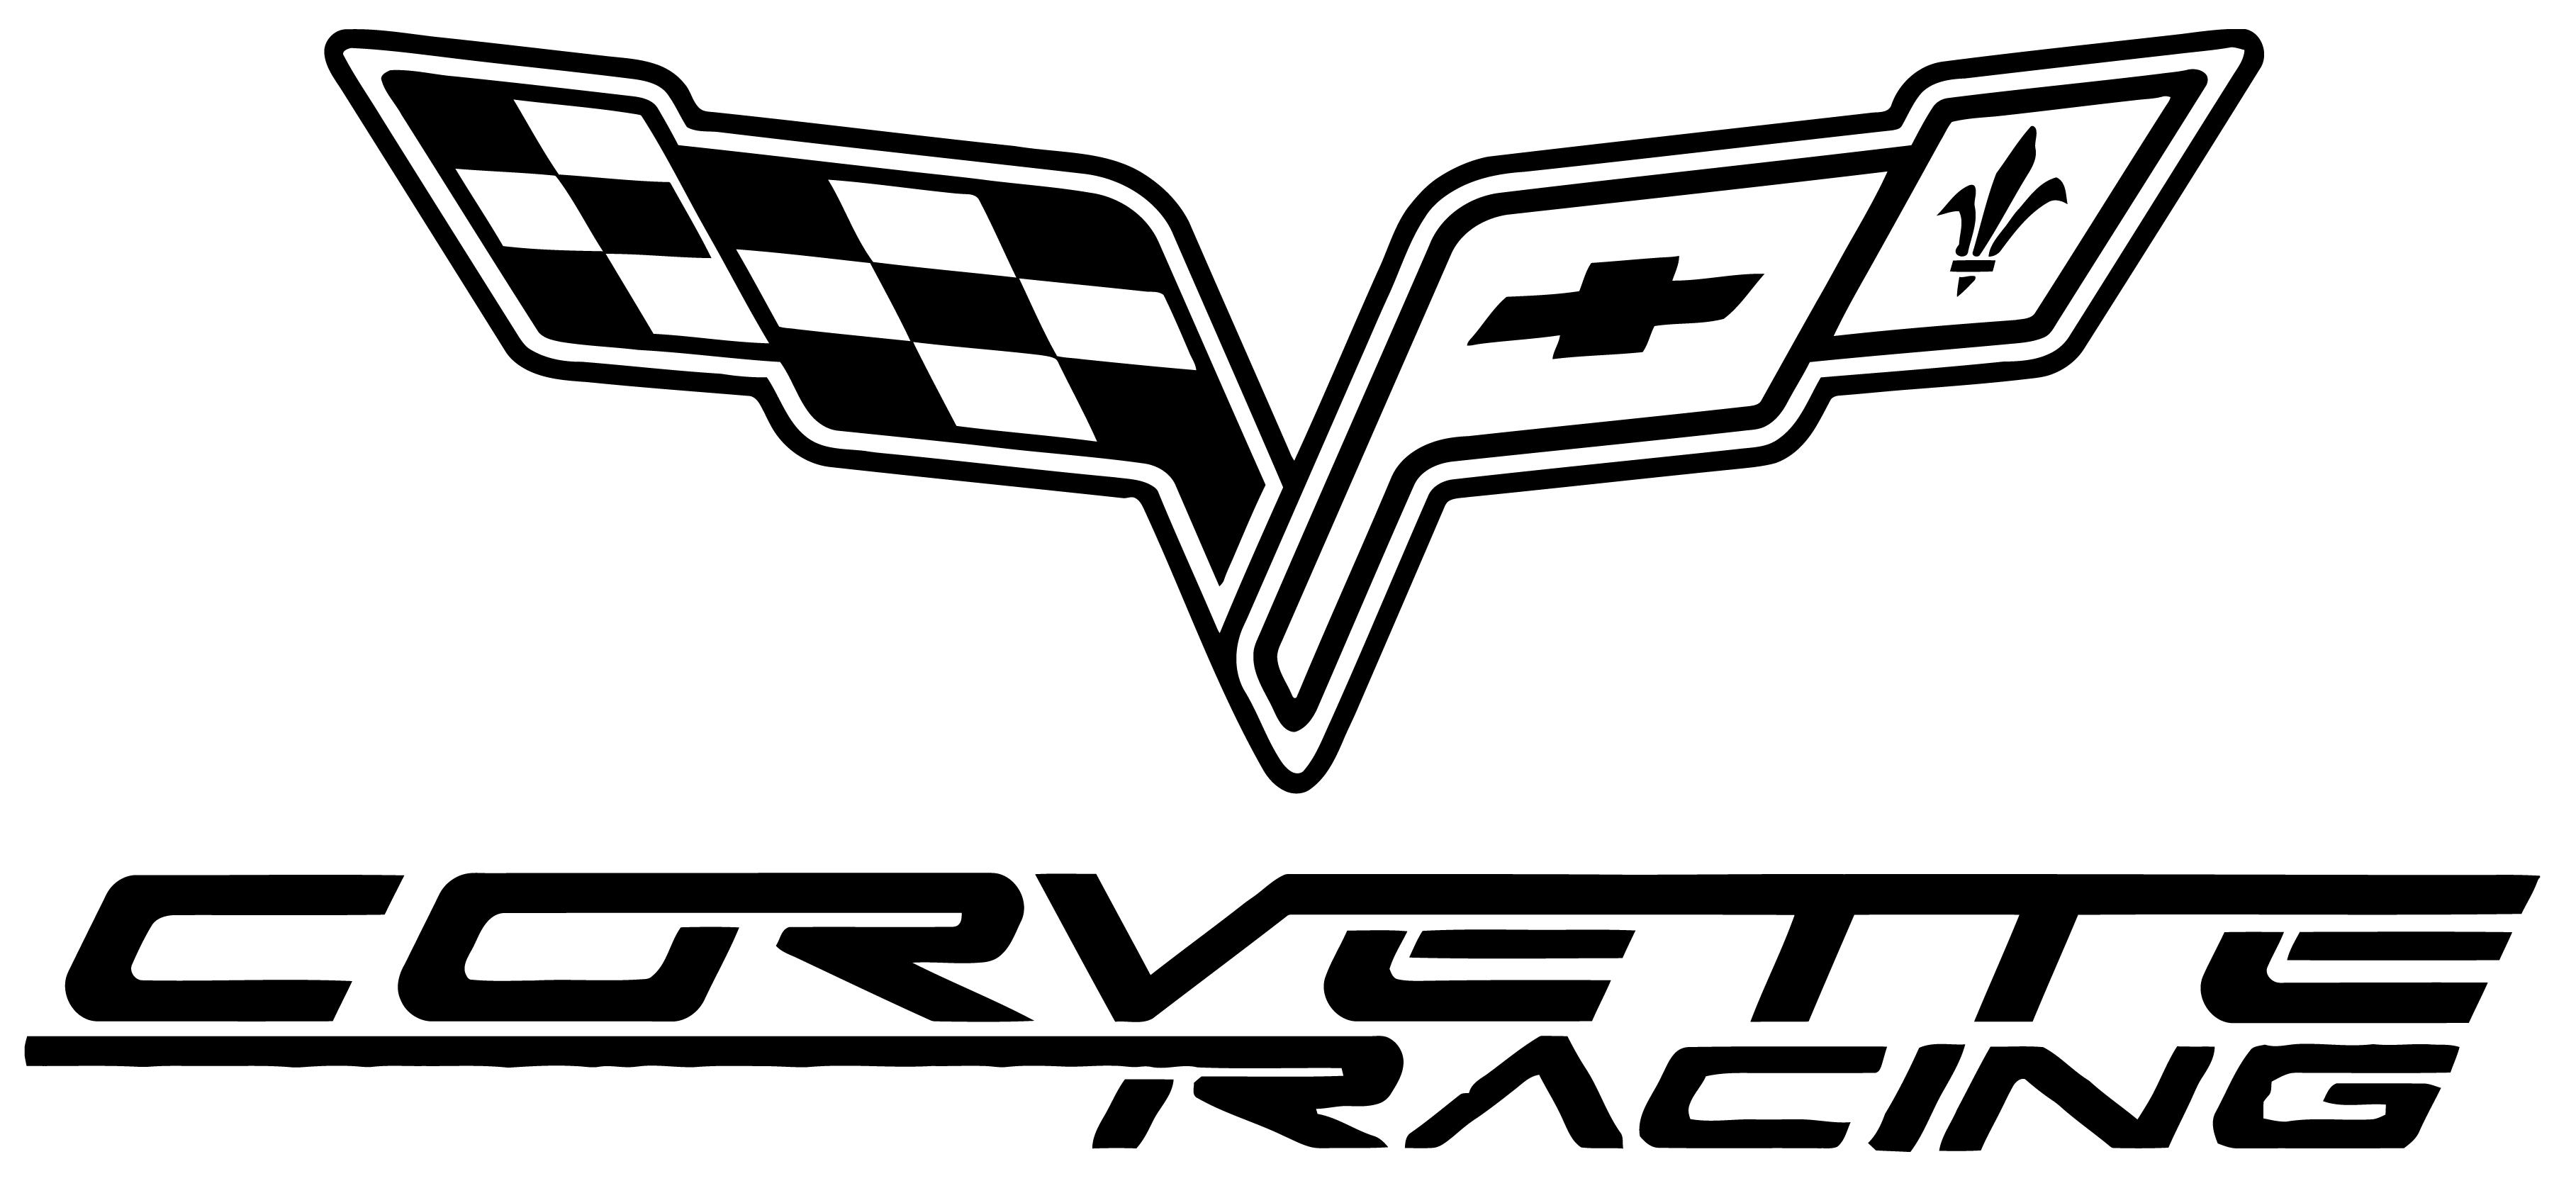 Corvette Racing Logo Collections.